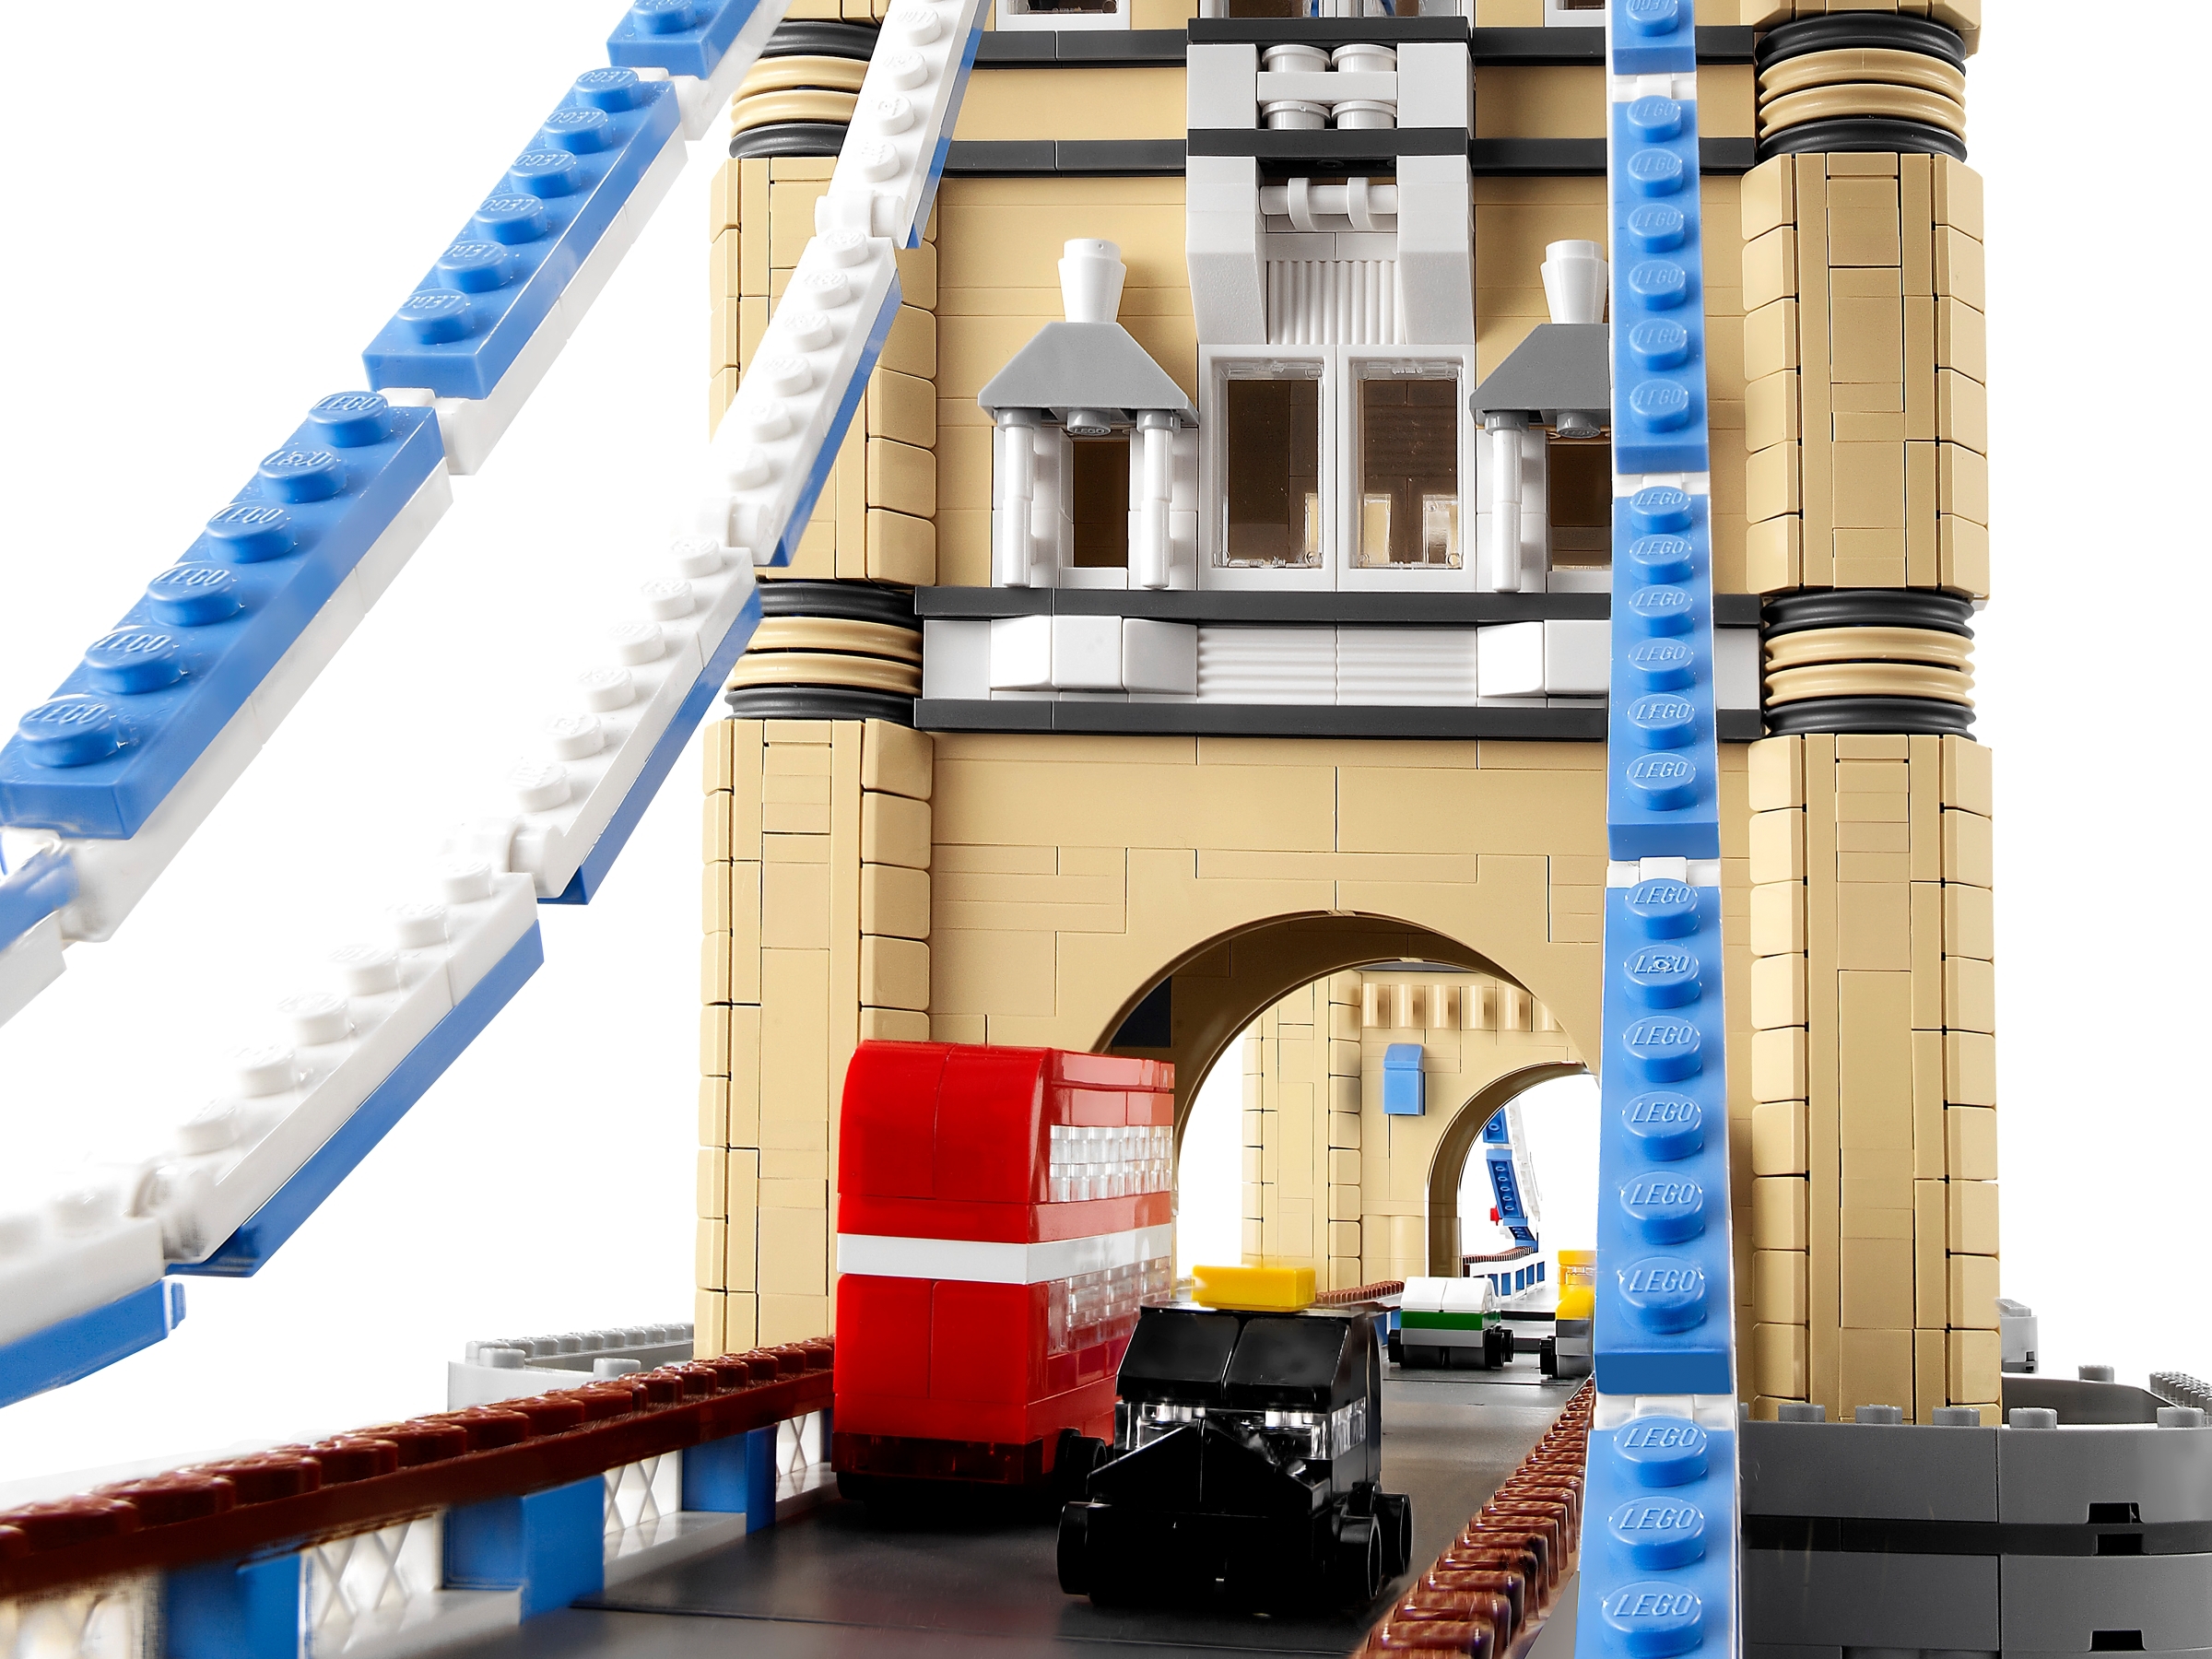 LEGO Architecture 210334 Londres